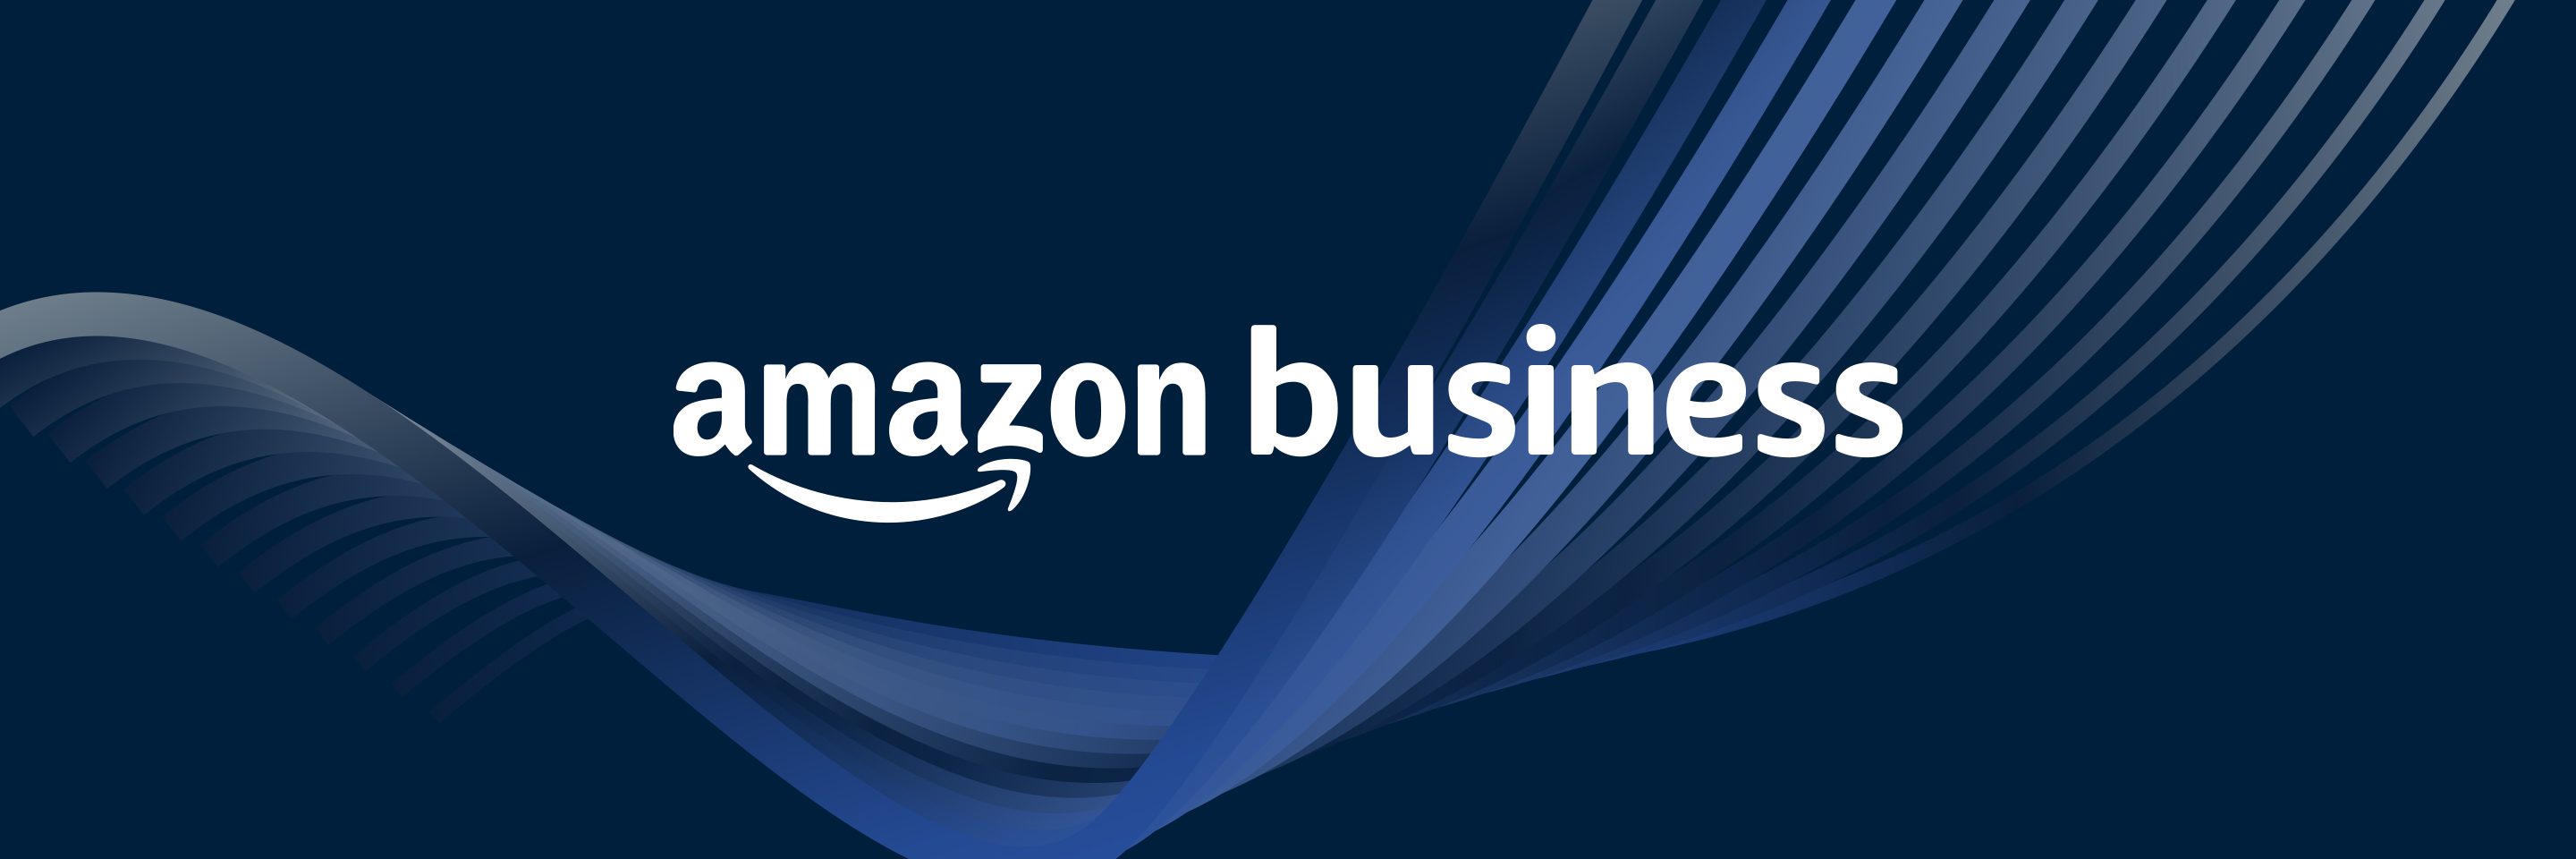 U.S. public entities and enterprises accelerate adoption of Amazon Business  | Amazon Business